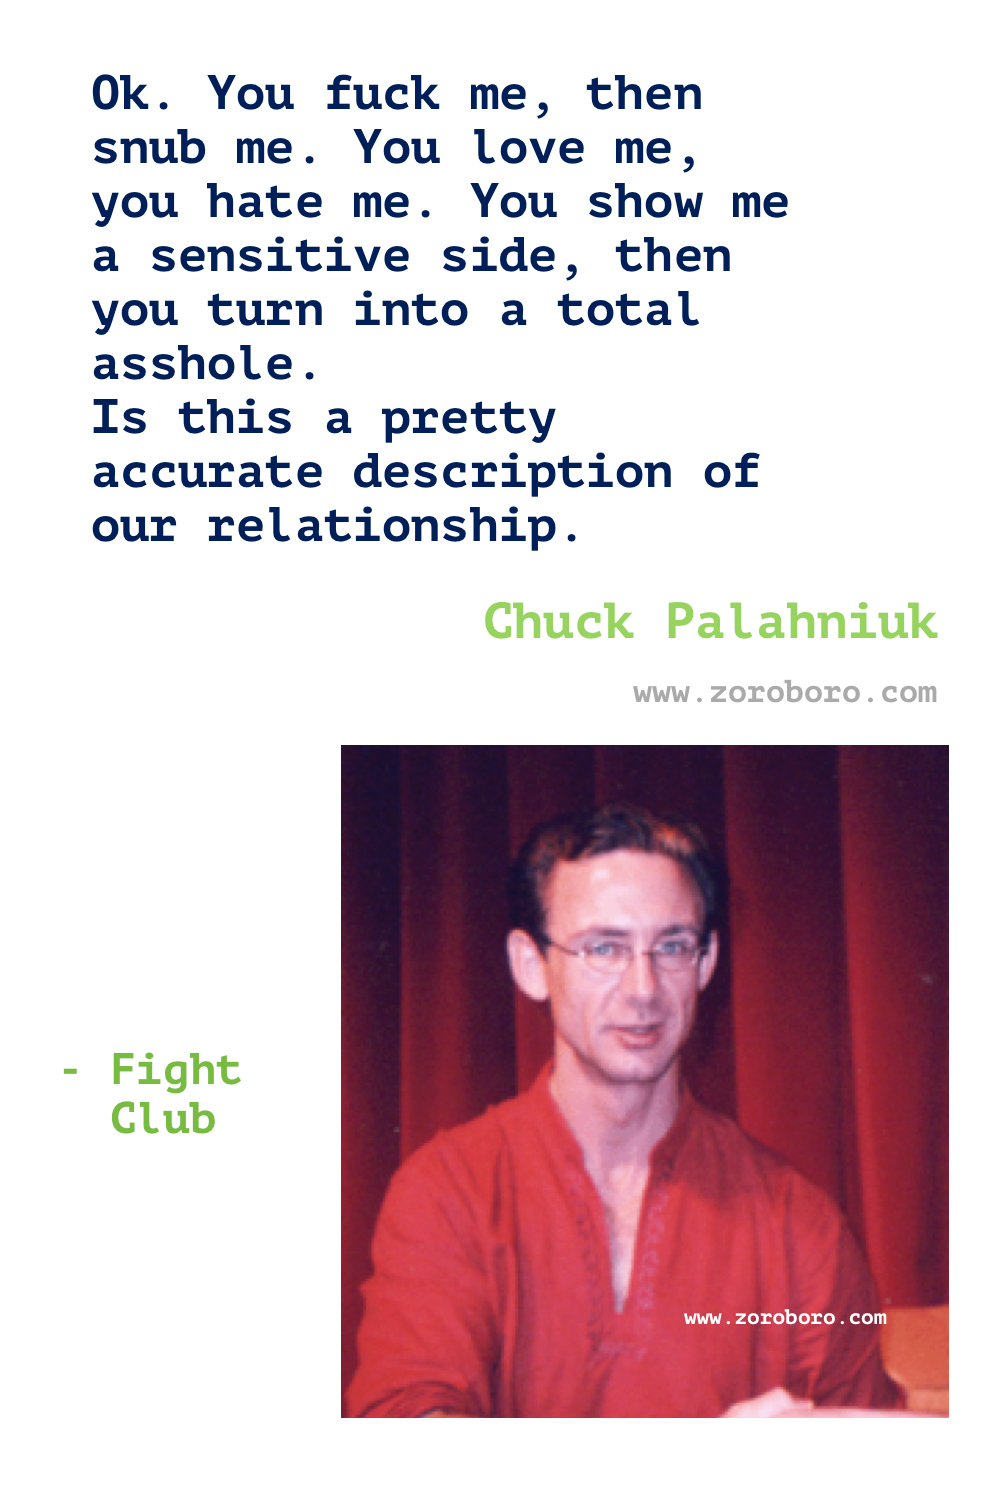 Chuck Palahniuk Quotes Part 1. Chuck Palahniuk Books Quotes. Chuck Palahniuk Fight Club, Invisible Monsters, Choke & Survivor (Palahniuk novel). Fight Club Quotes. Fight Club Book. Chuck Palahniuk Quotes.